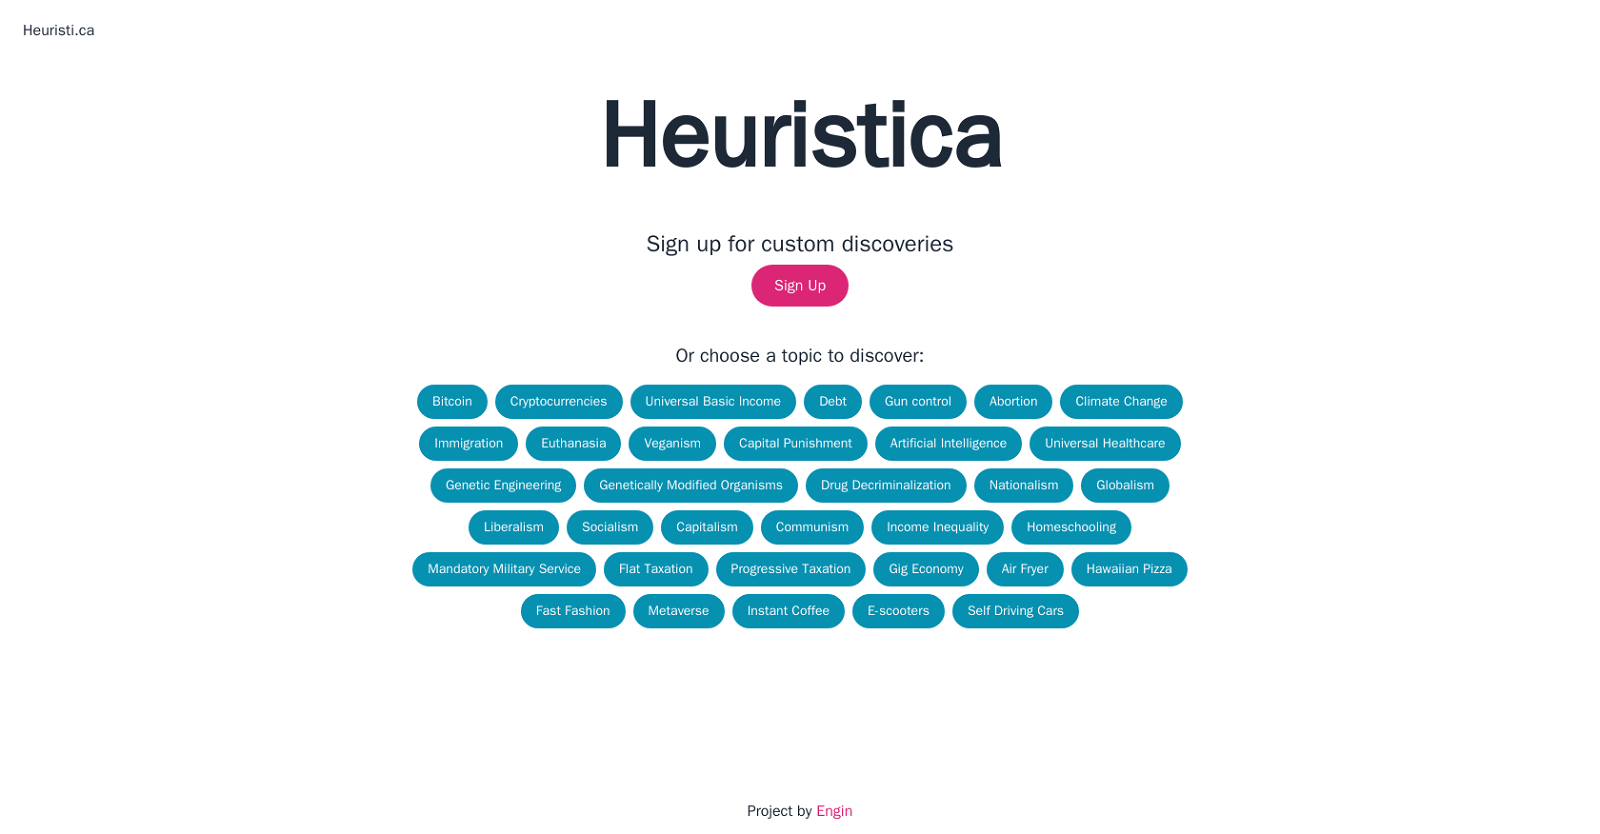 Heuristica website